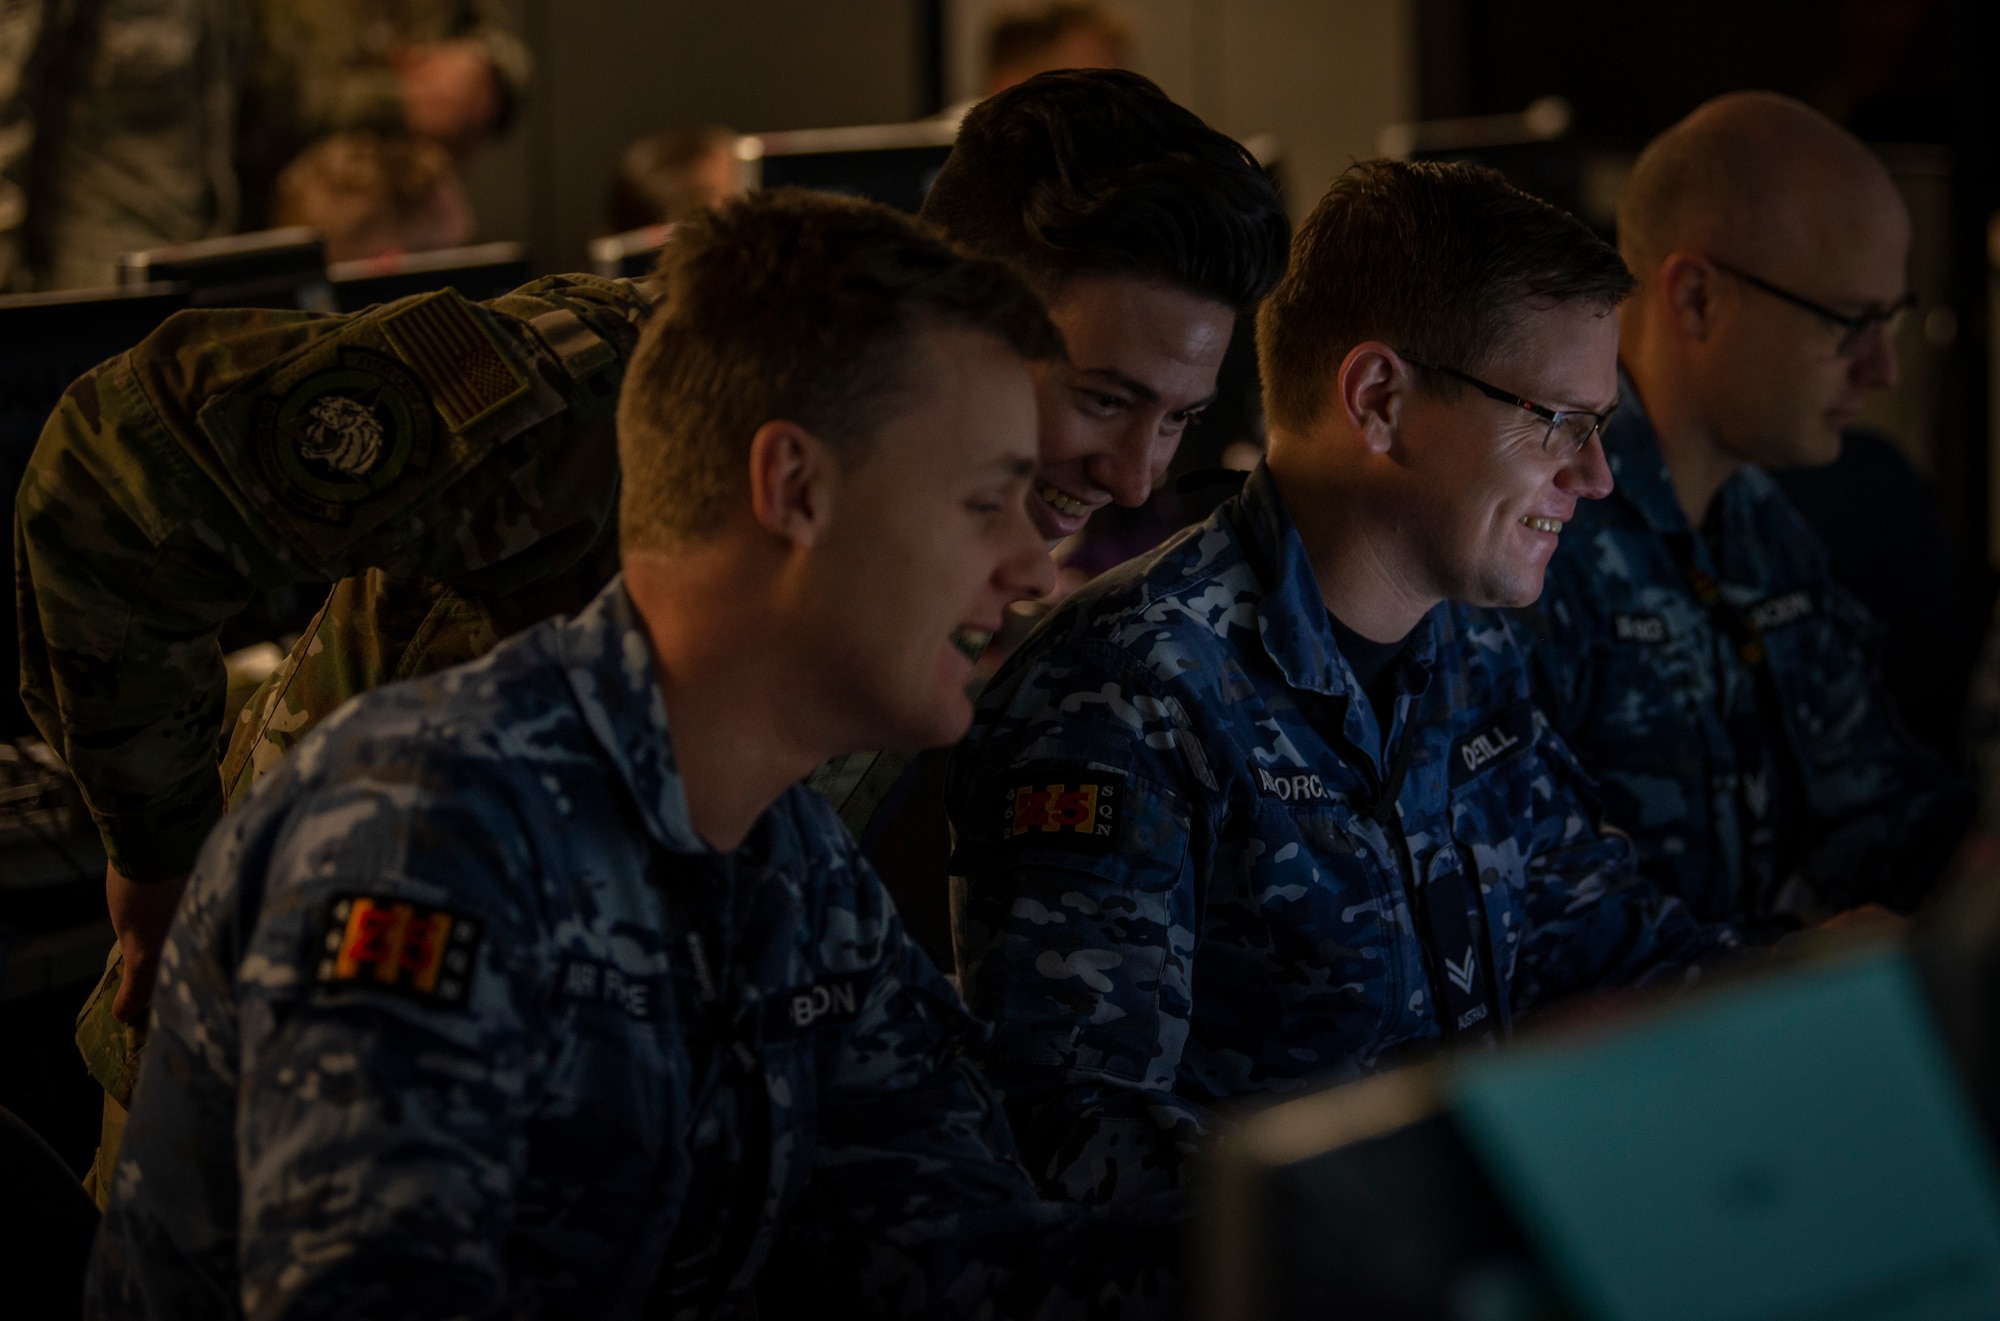 A U.S Air Force Airman and Royal Australian Air Force members look at a computer screen.